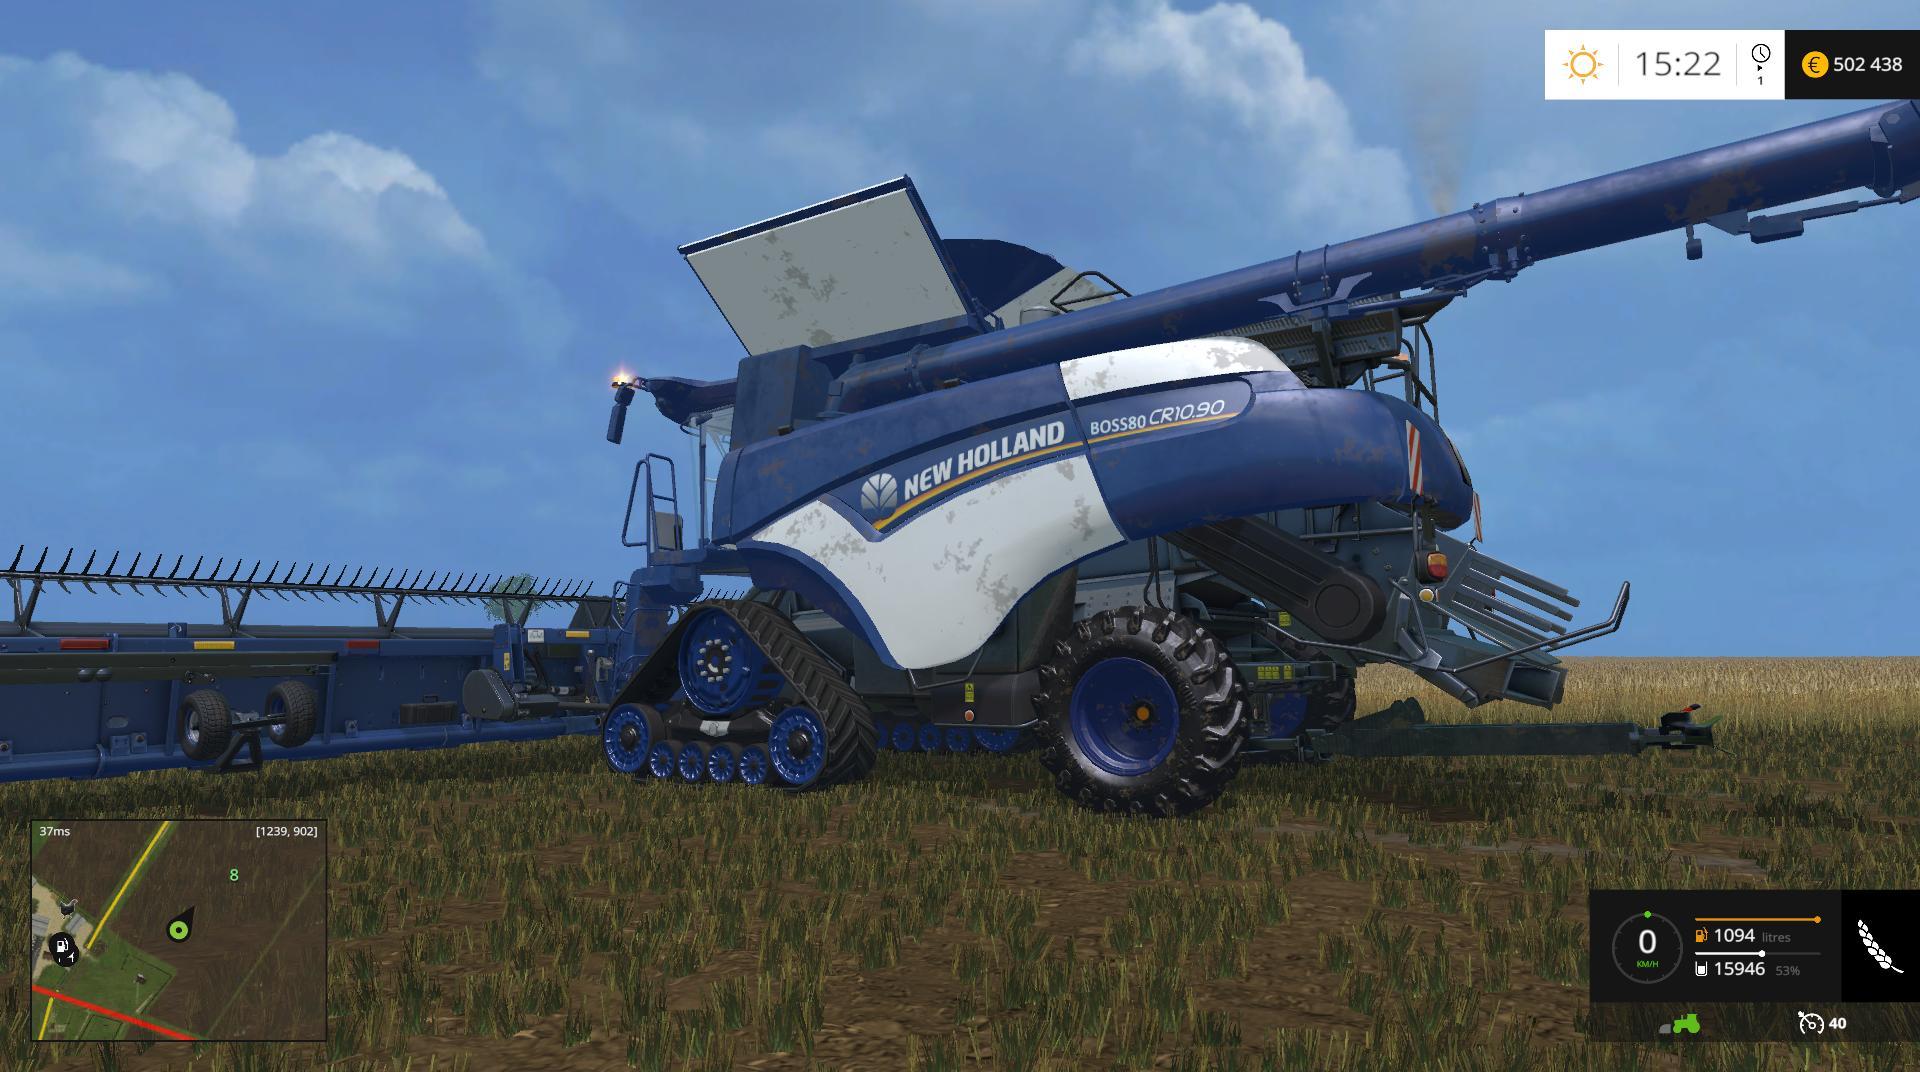 New farming simulator